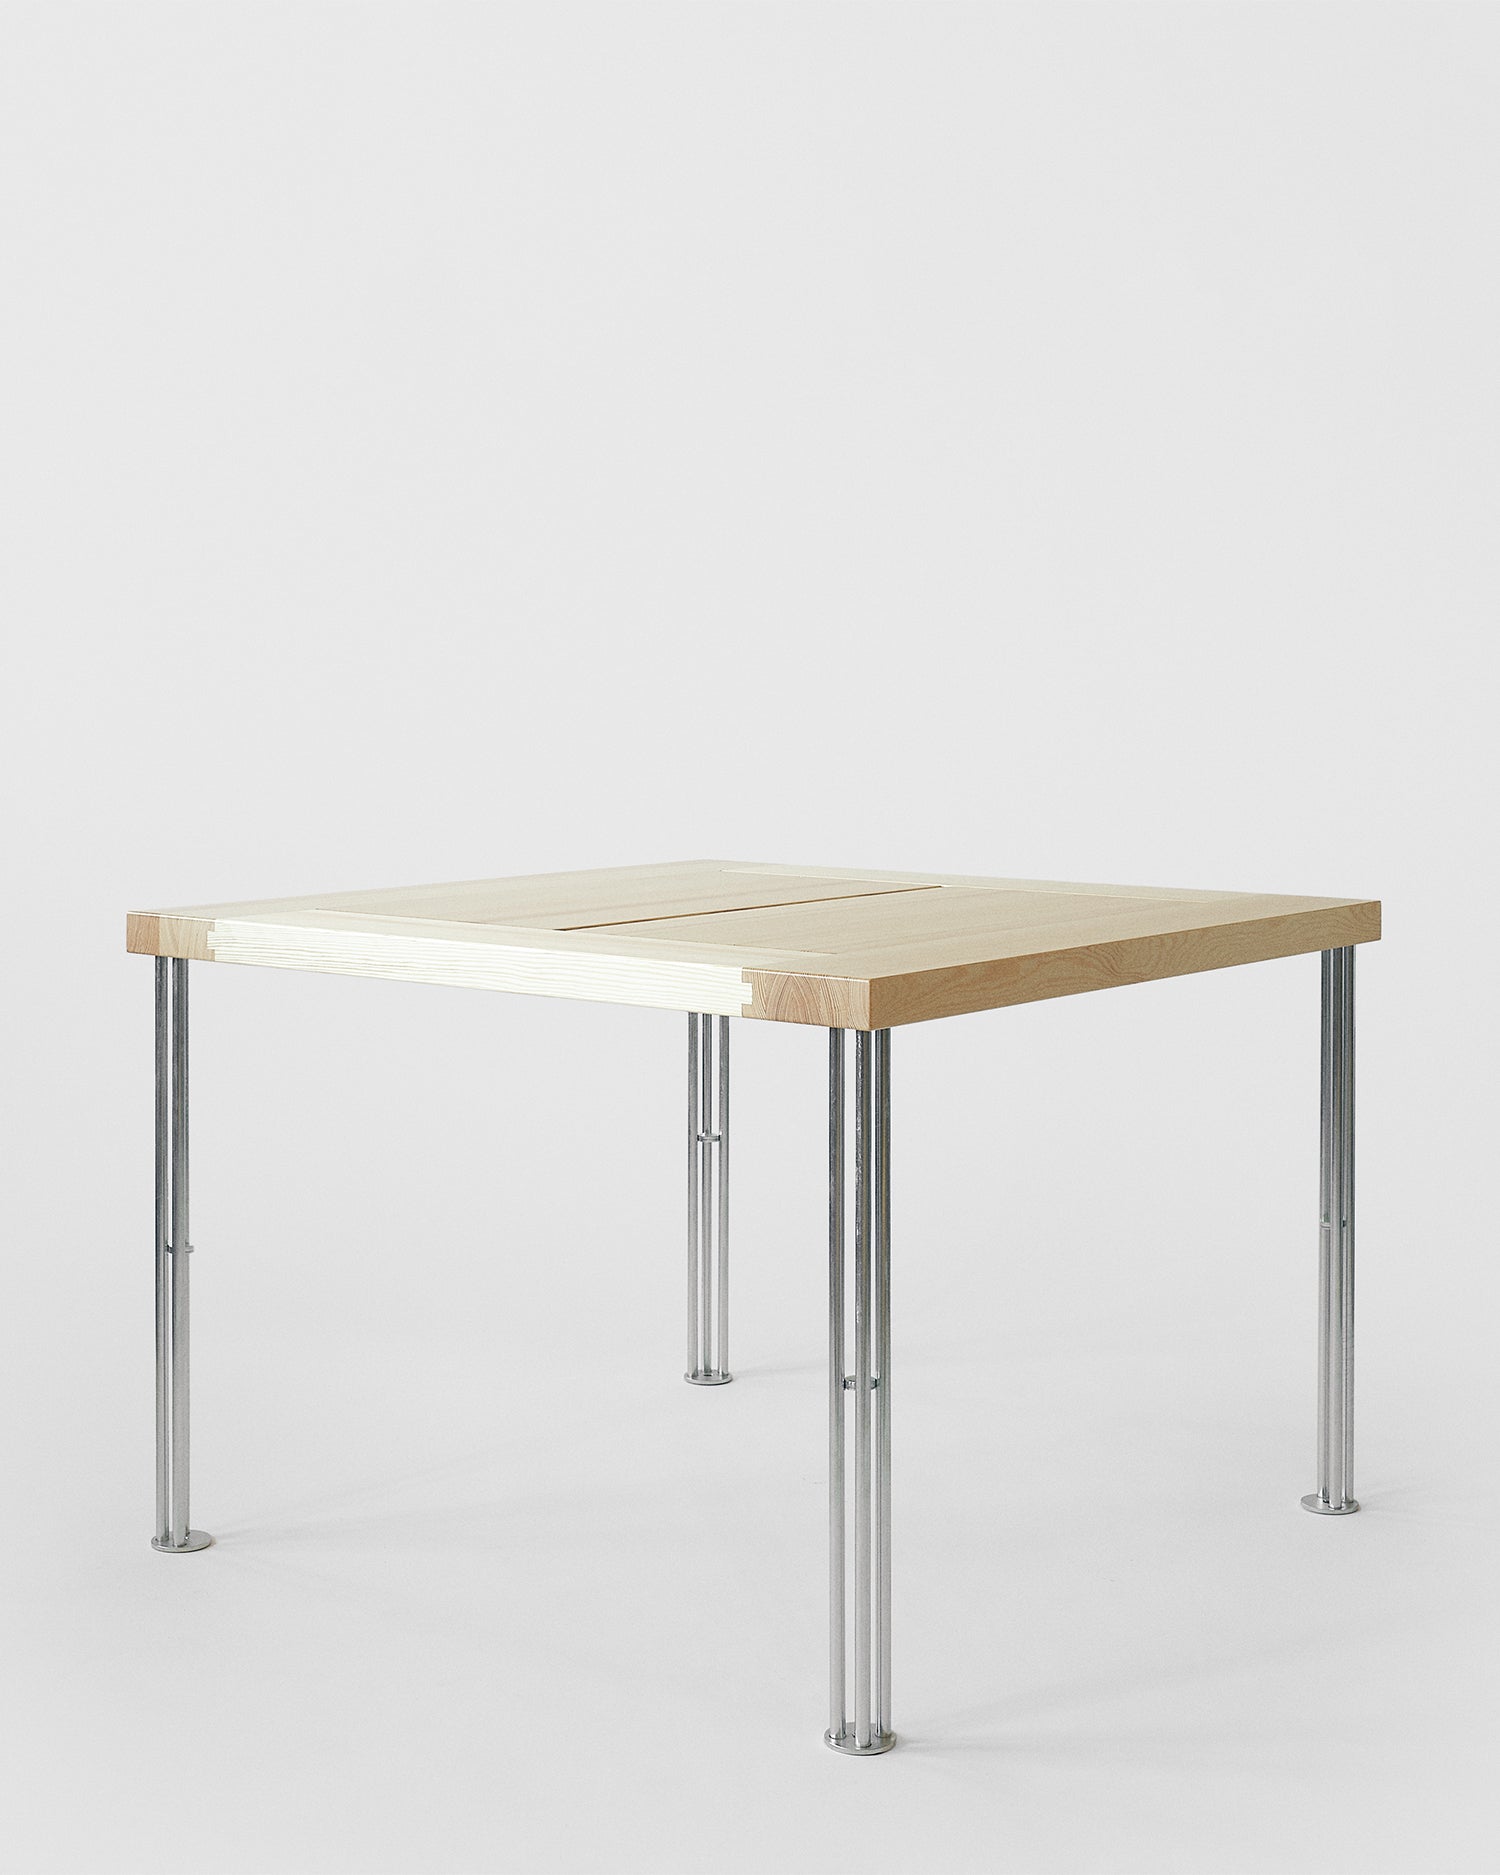 Töreboda Table / Electroplated